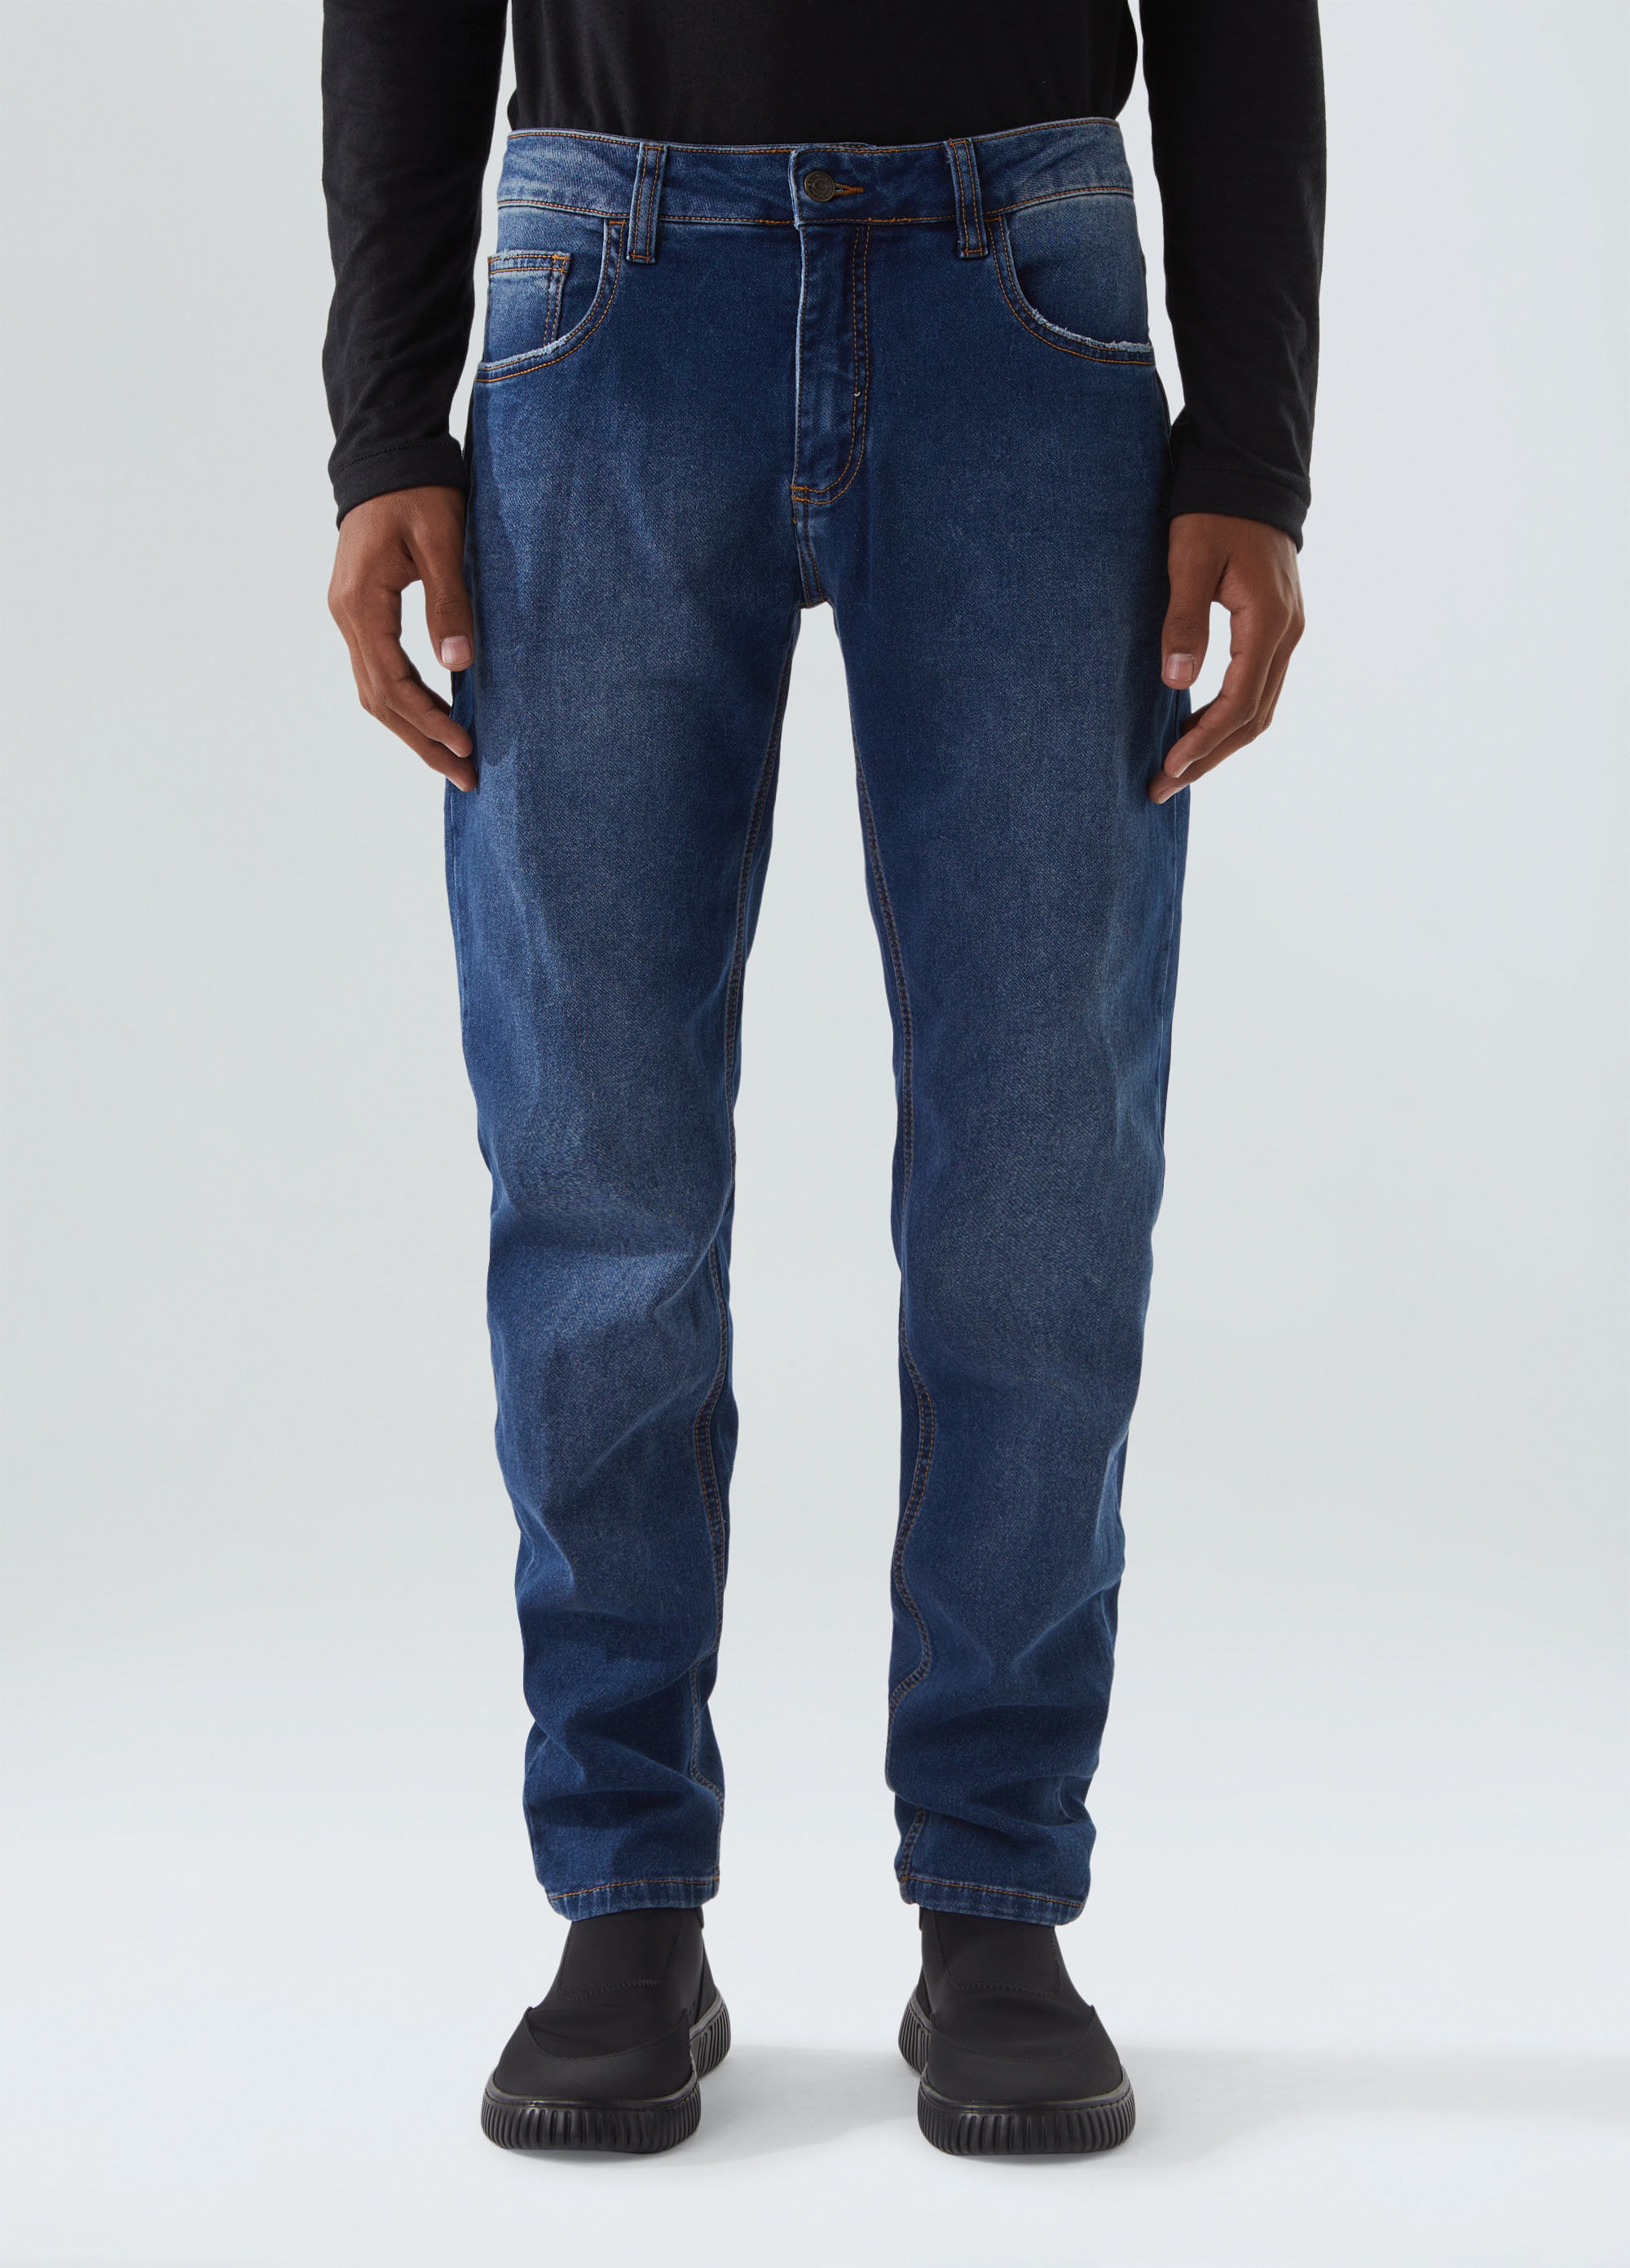 6486185_calca-jeans-comfort-new_1